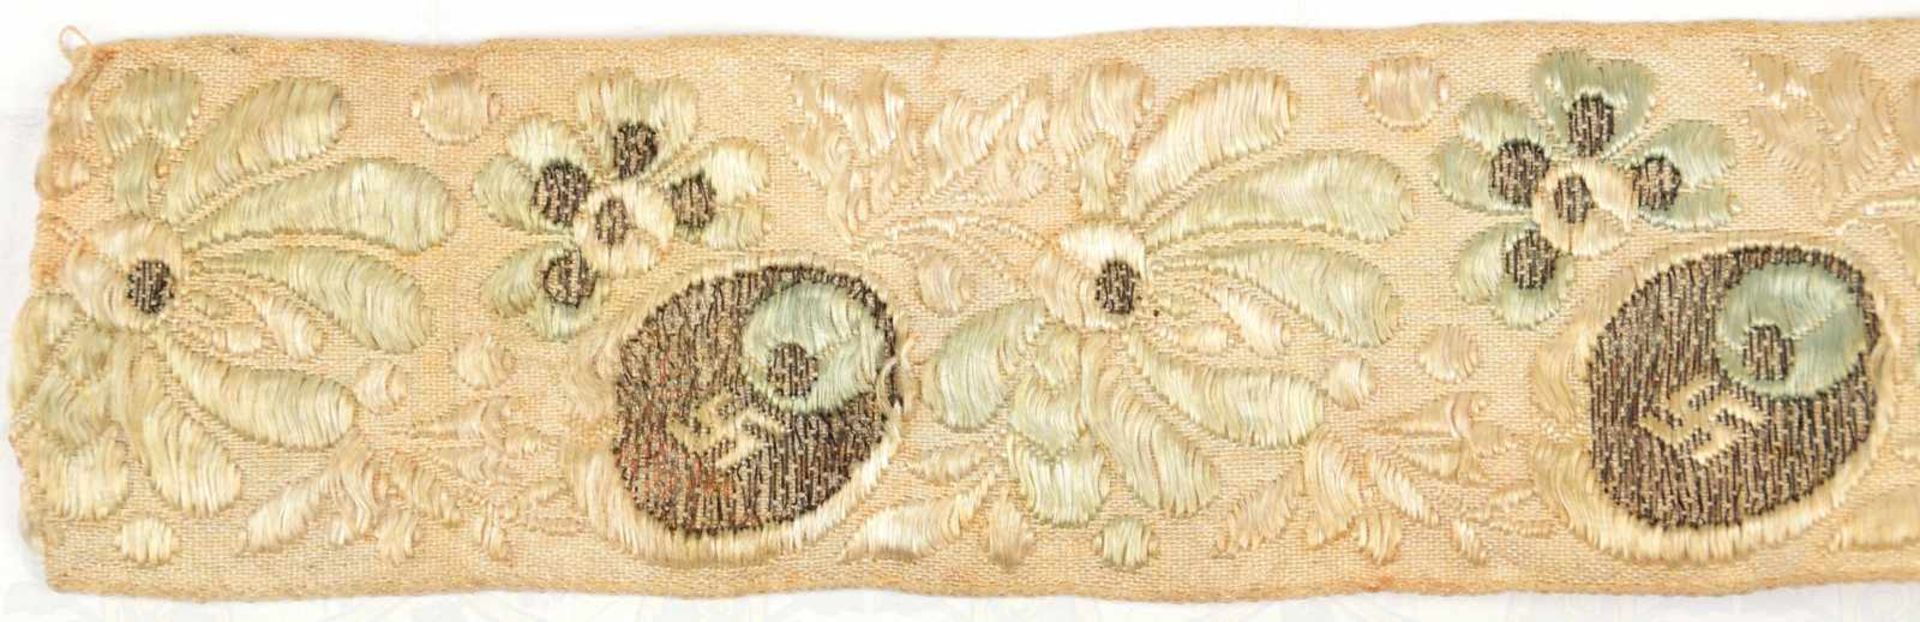 ROLLE BORTE, farb. gewebt u. gestickt m. HK u. floralen Motiven, L. 295cm, Br. 37mm, um 1933 - Bild 2 aus 2